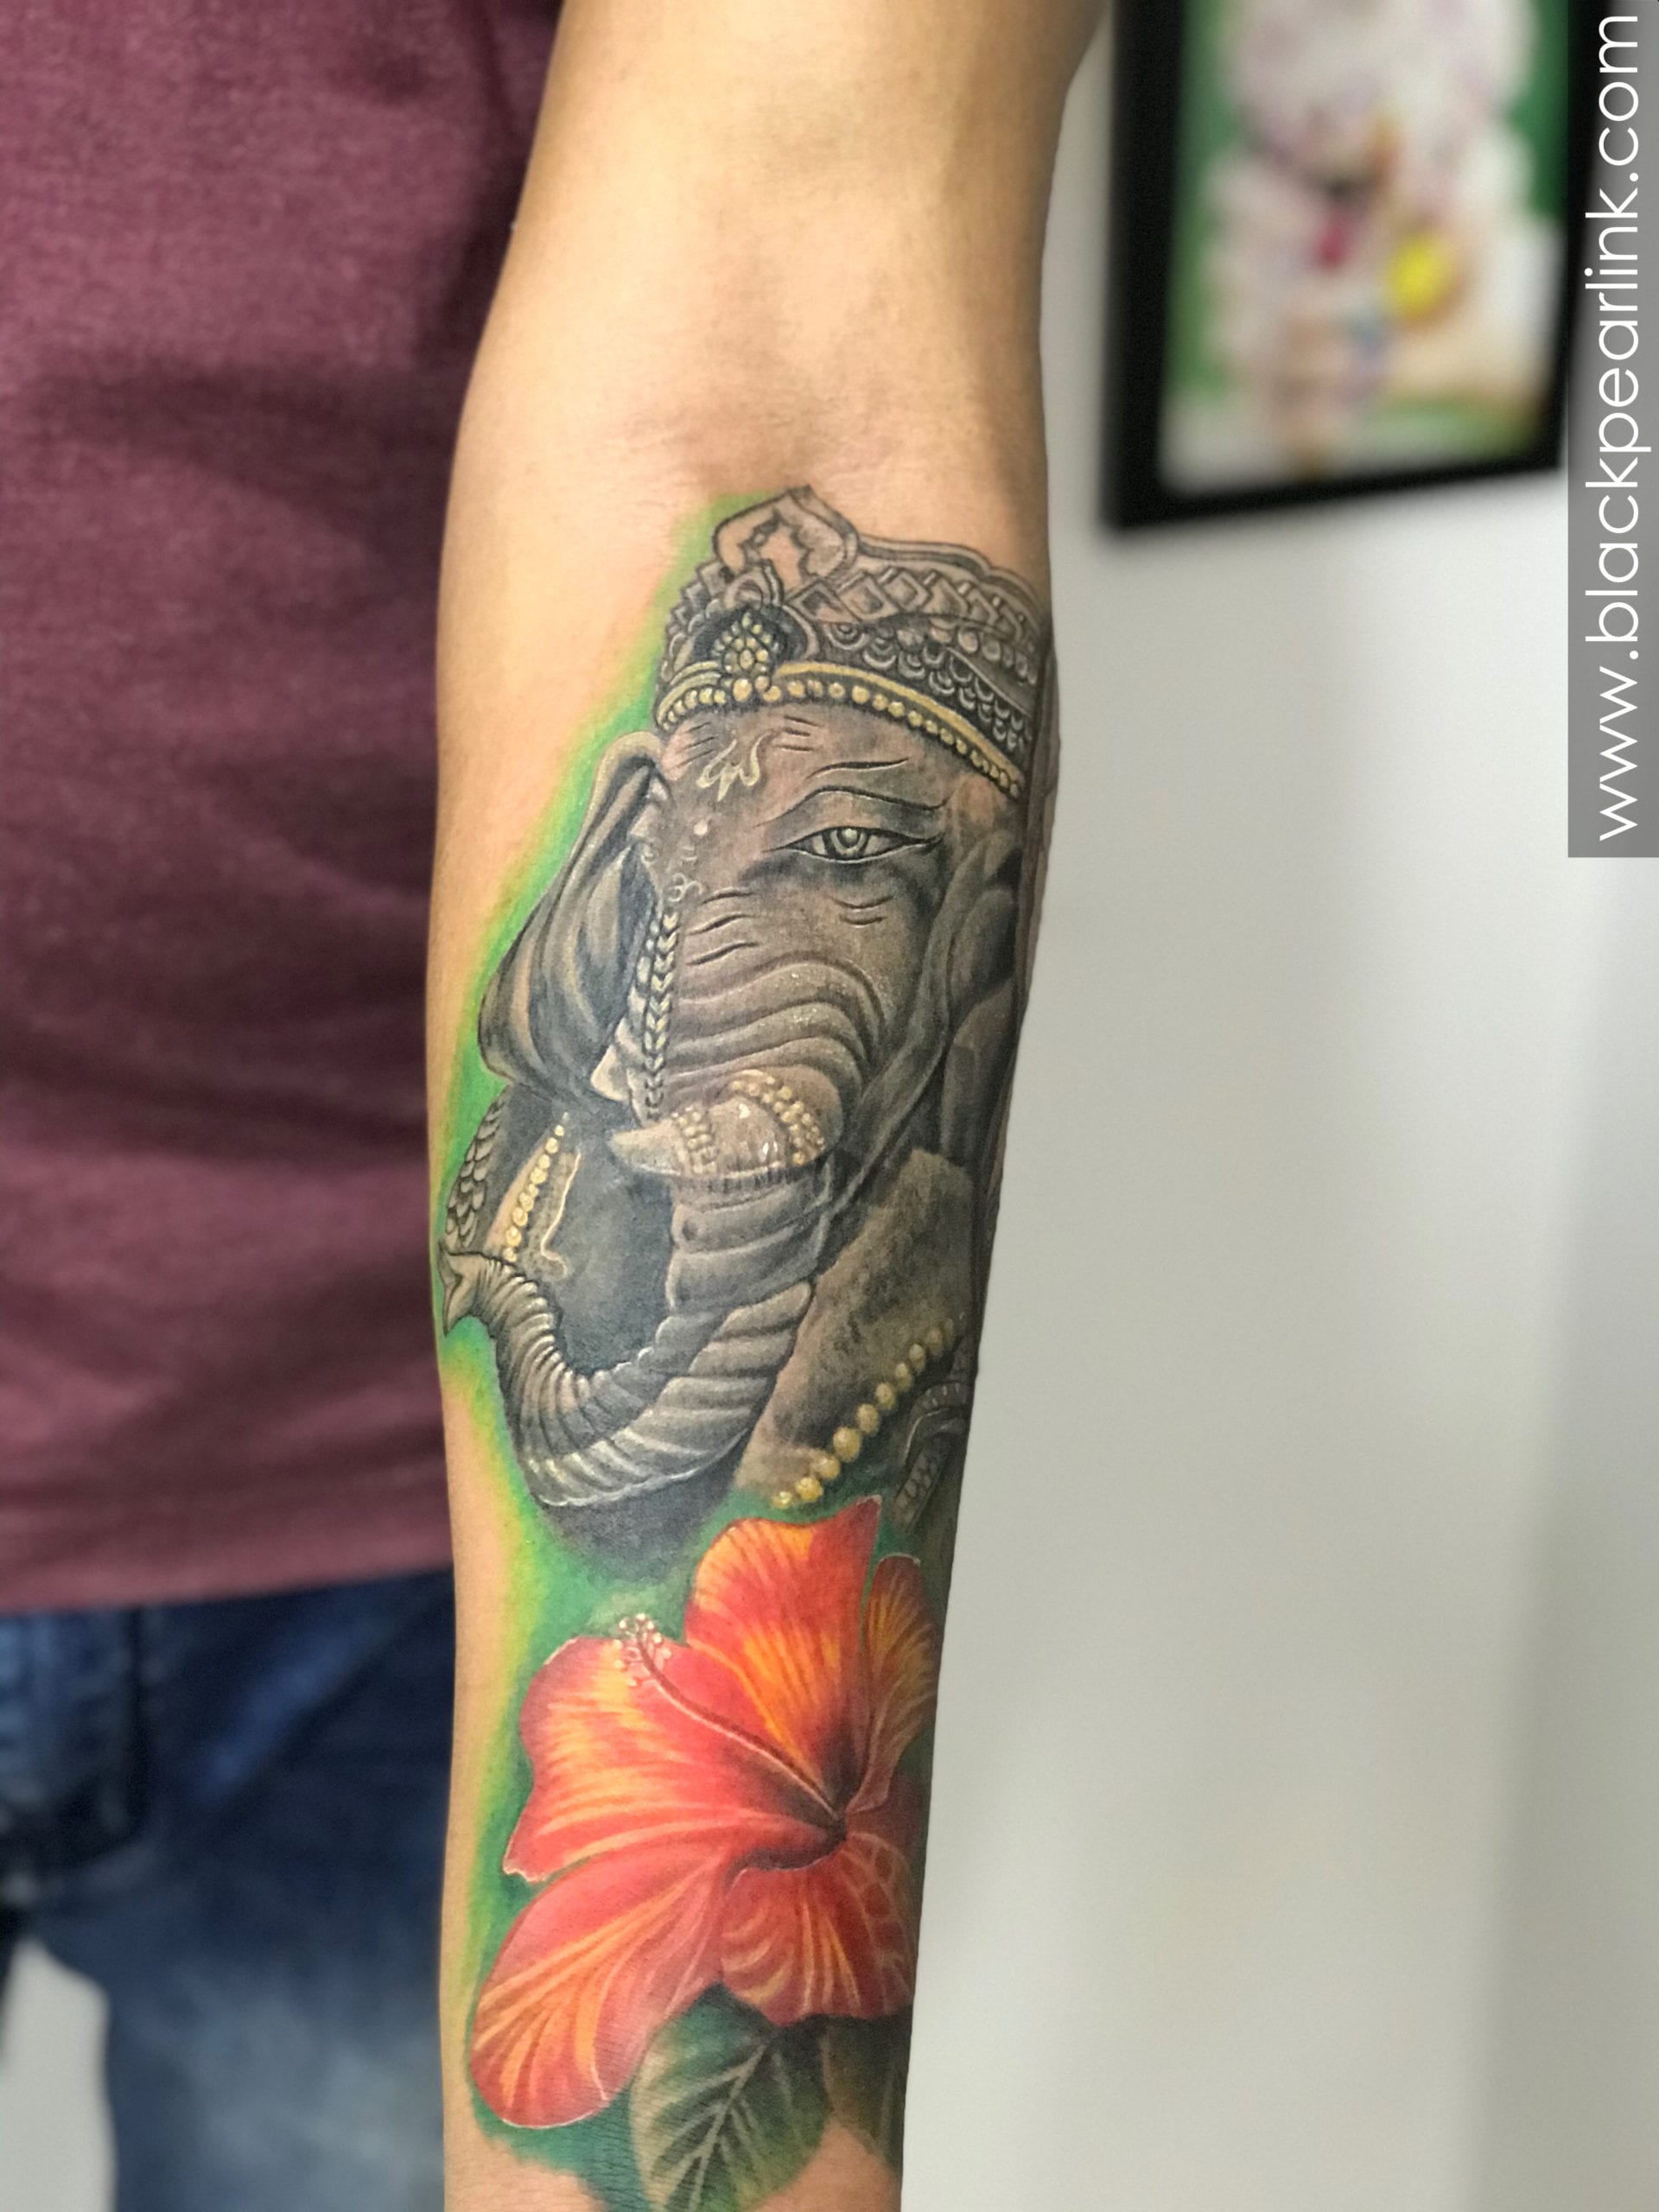 Black and Grey Ganesha half sleeve tattoo on upper arm. :: Behance